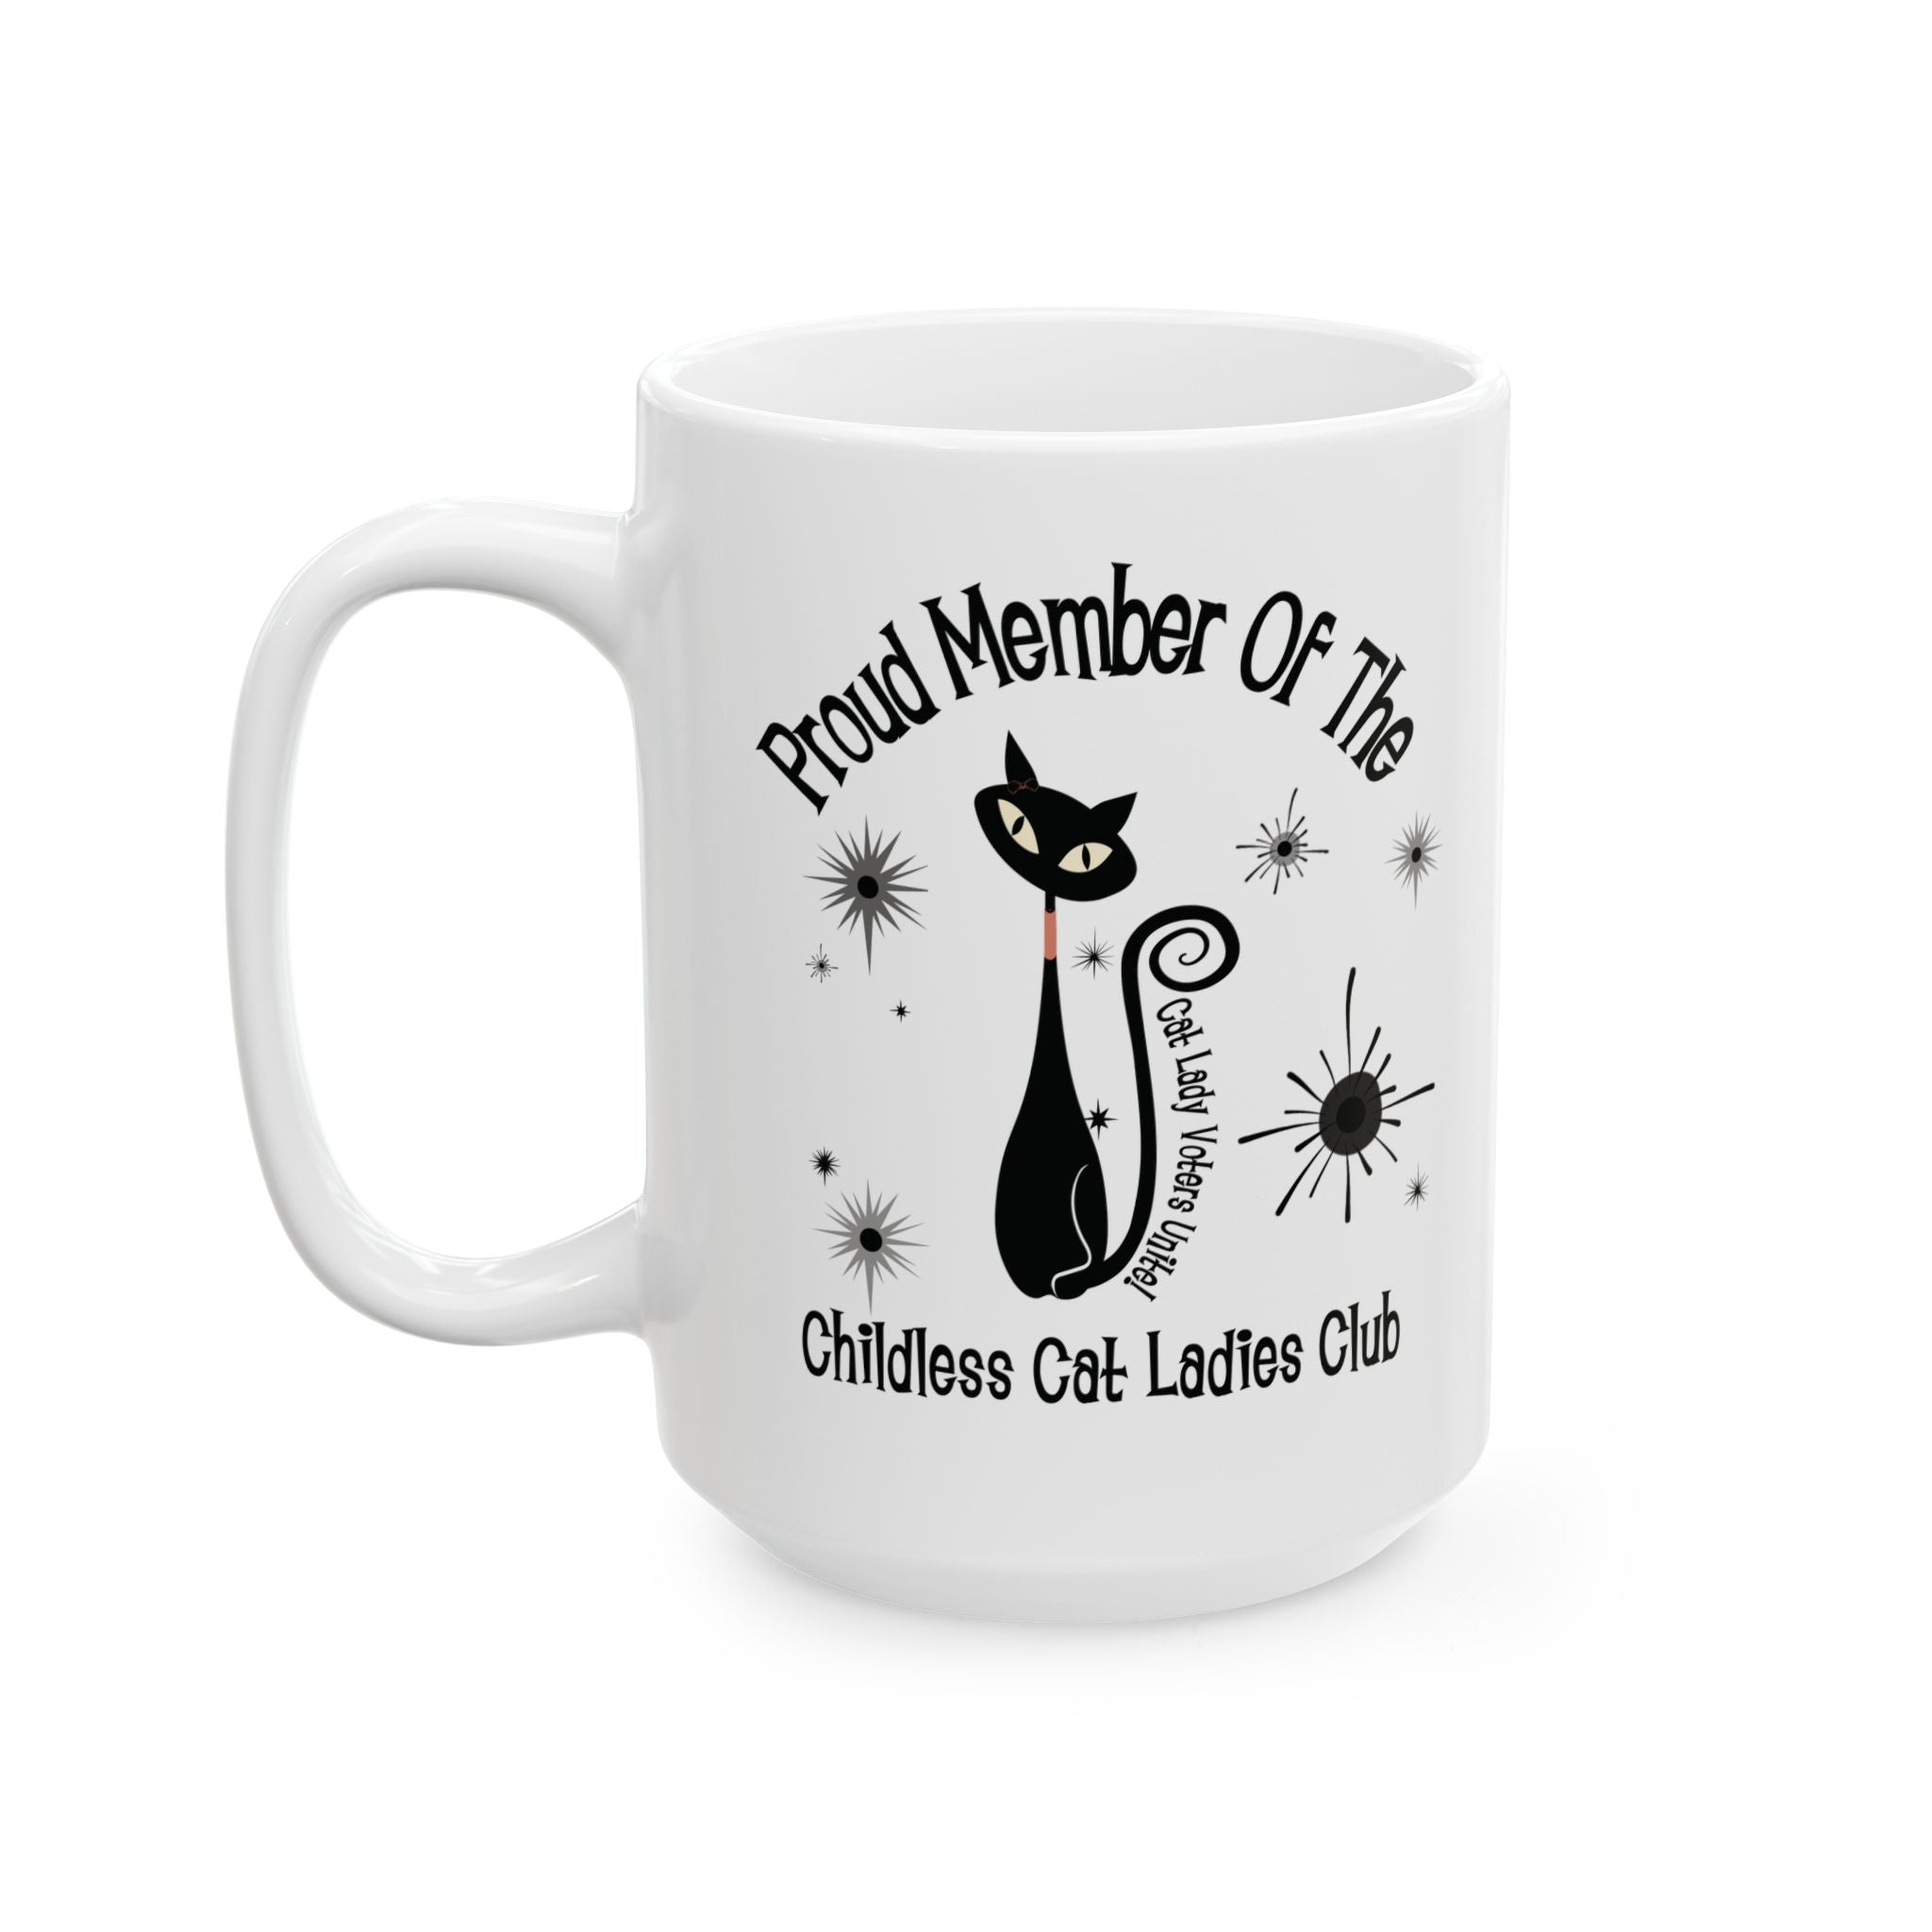 Kate McEnroe New York Proud Member of the Childless Cat Ladies Club Mug, Retro Atomic Kitschy Cat DesignMugs24300067542254986625